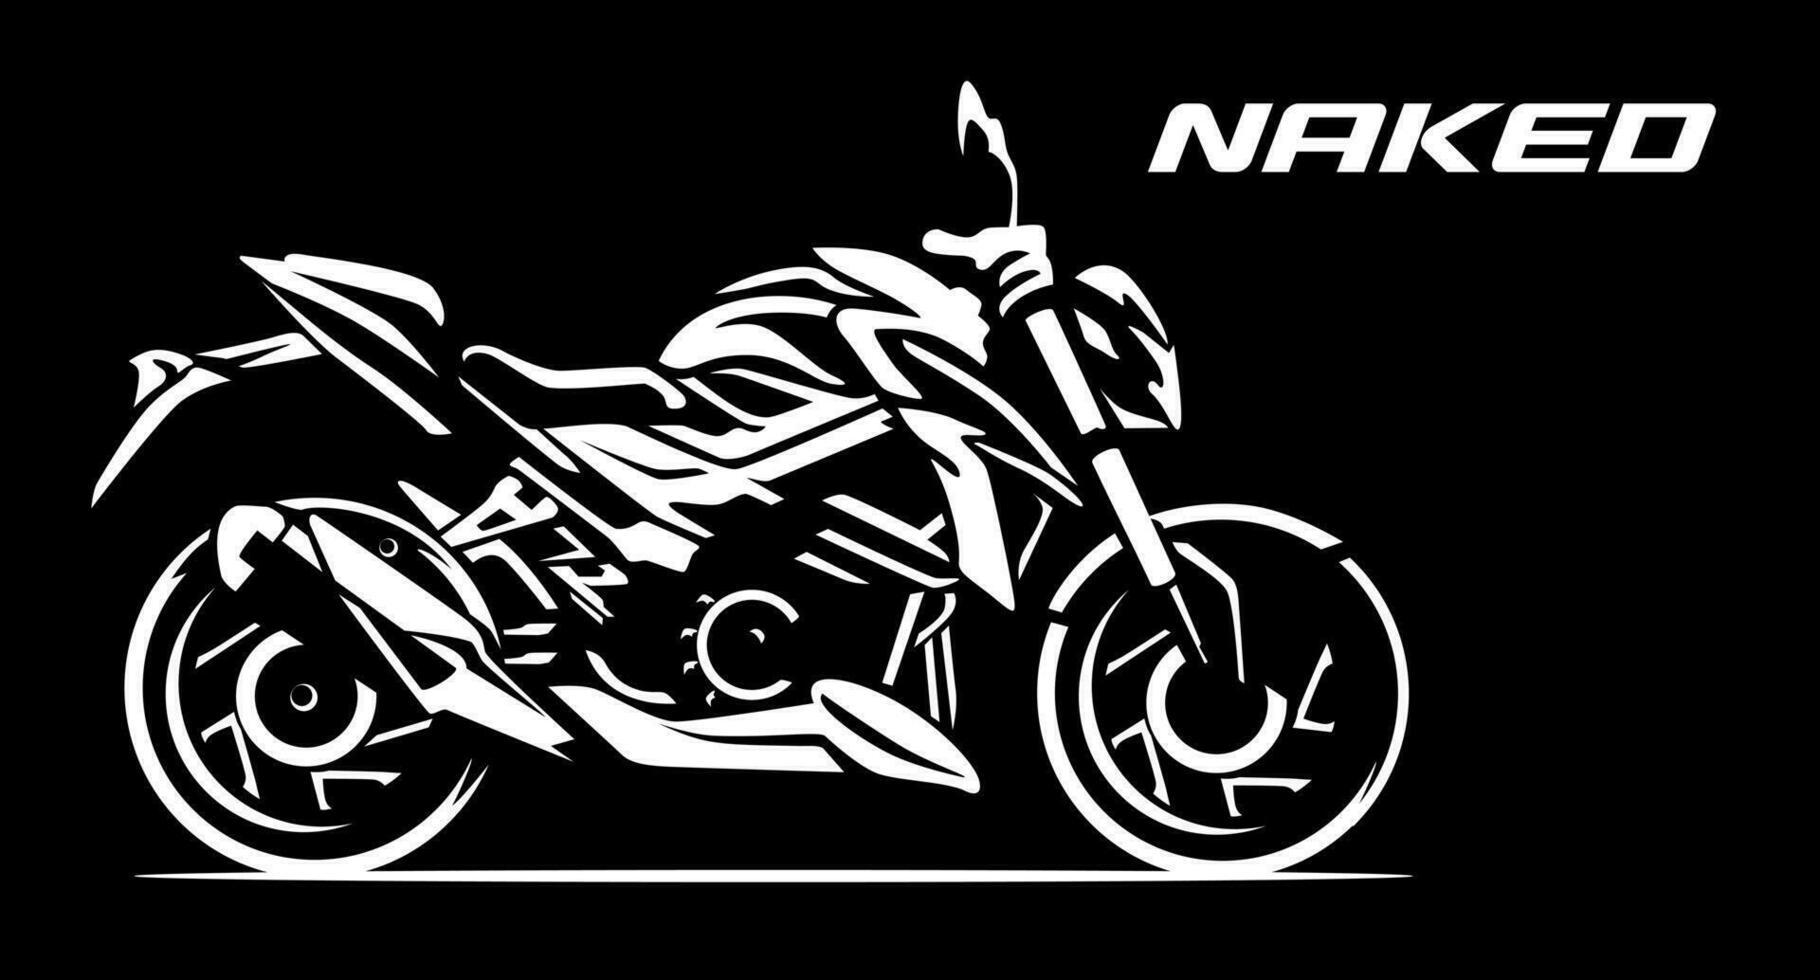 Dynamic Motorbike Illustration design vector